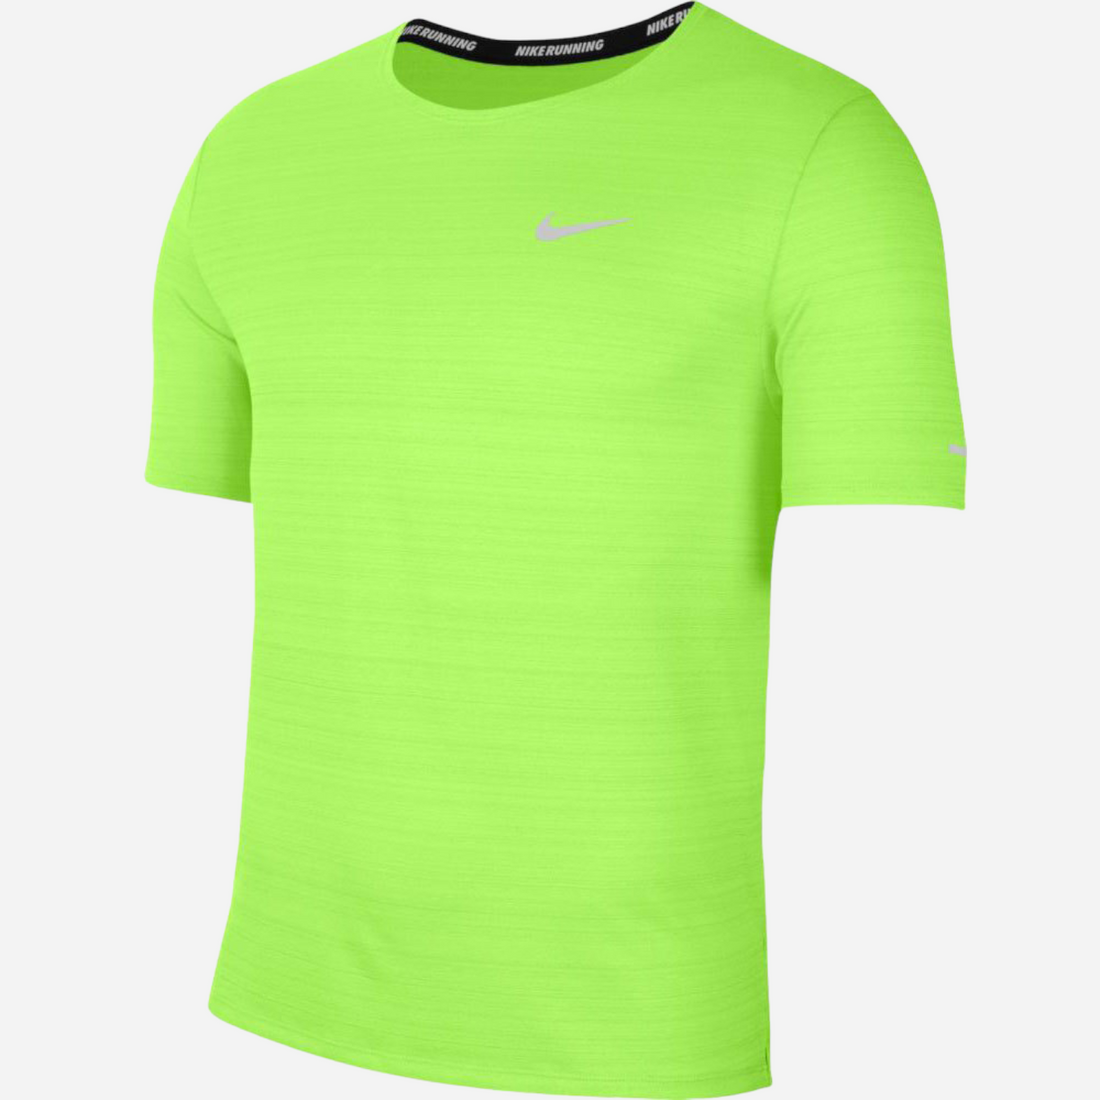 Nike - Miler 2.0 T Shirt - Neon Green 